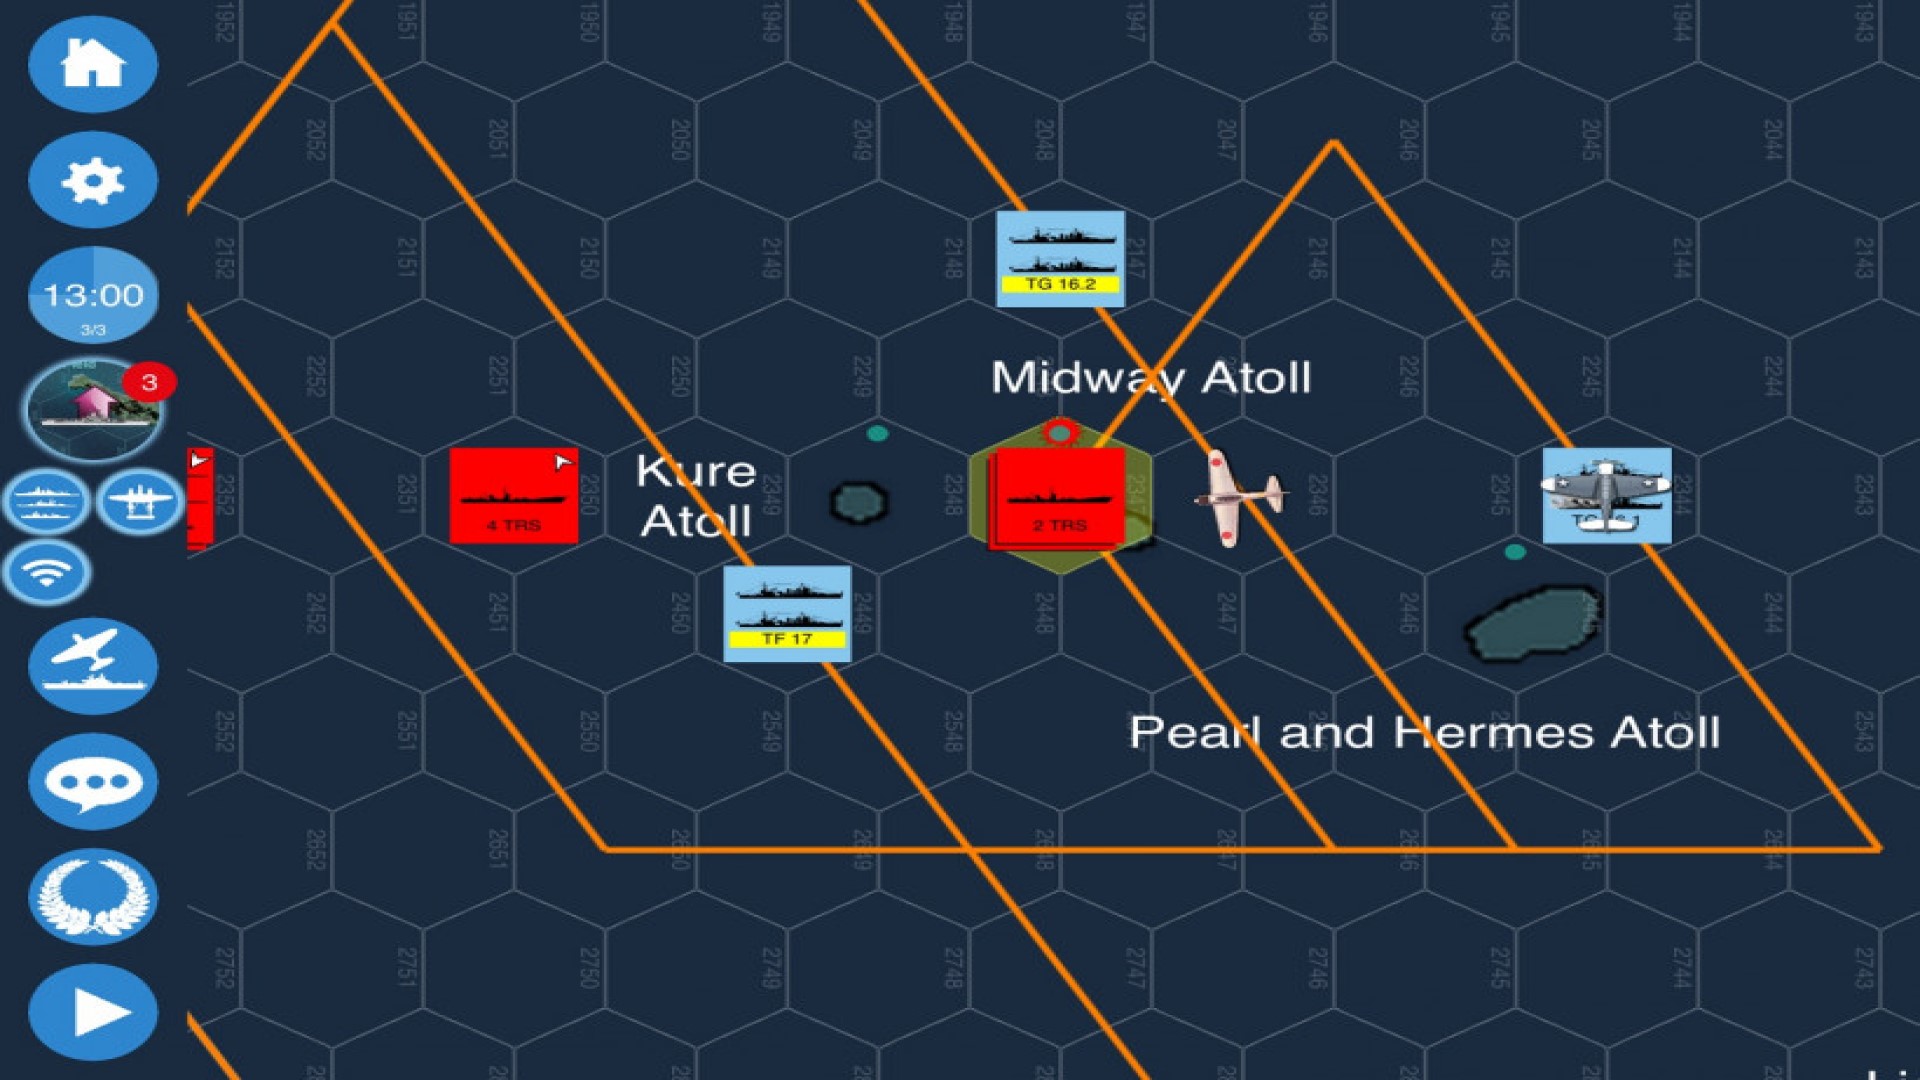 Best mobile war games: Carrier Battles 4 Guadalcanal. Image shows strategic schematics for a battle.